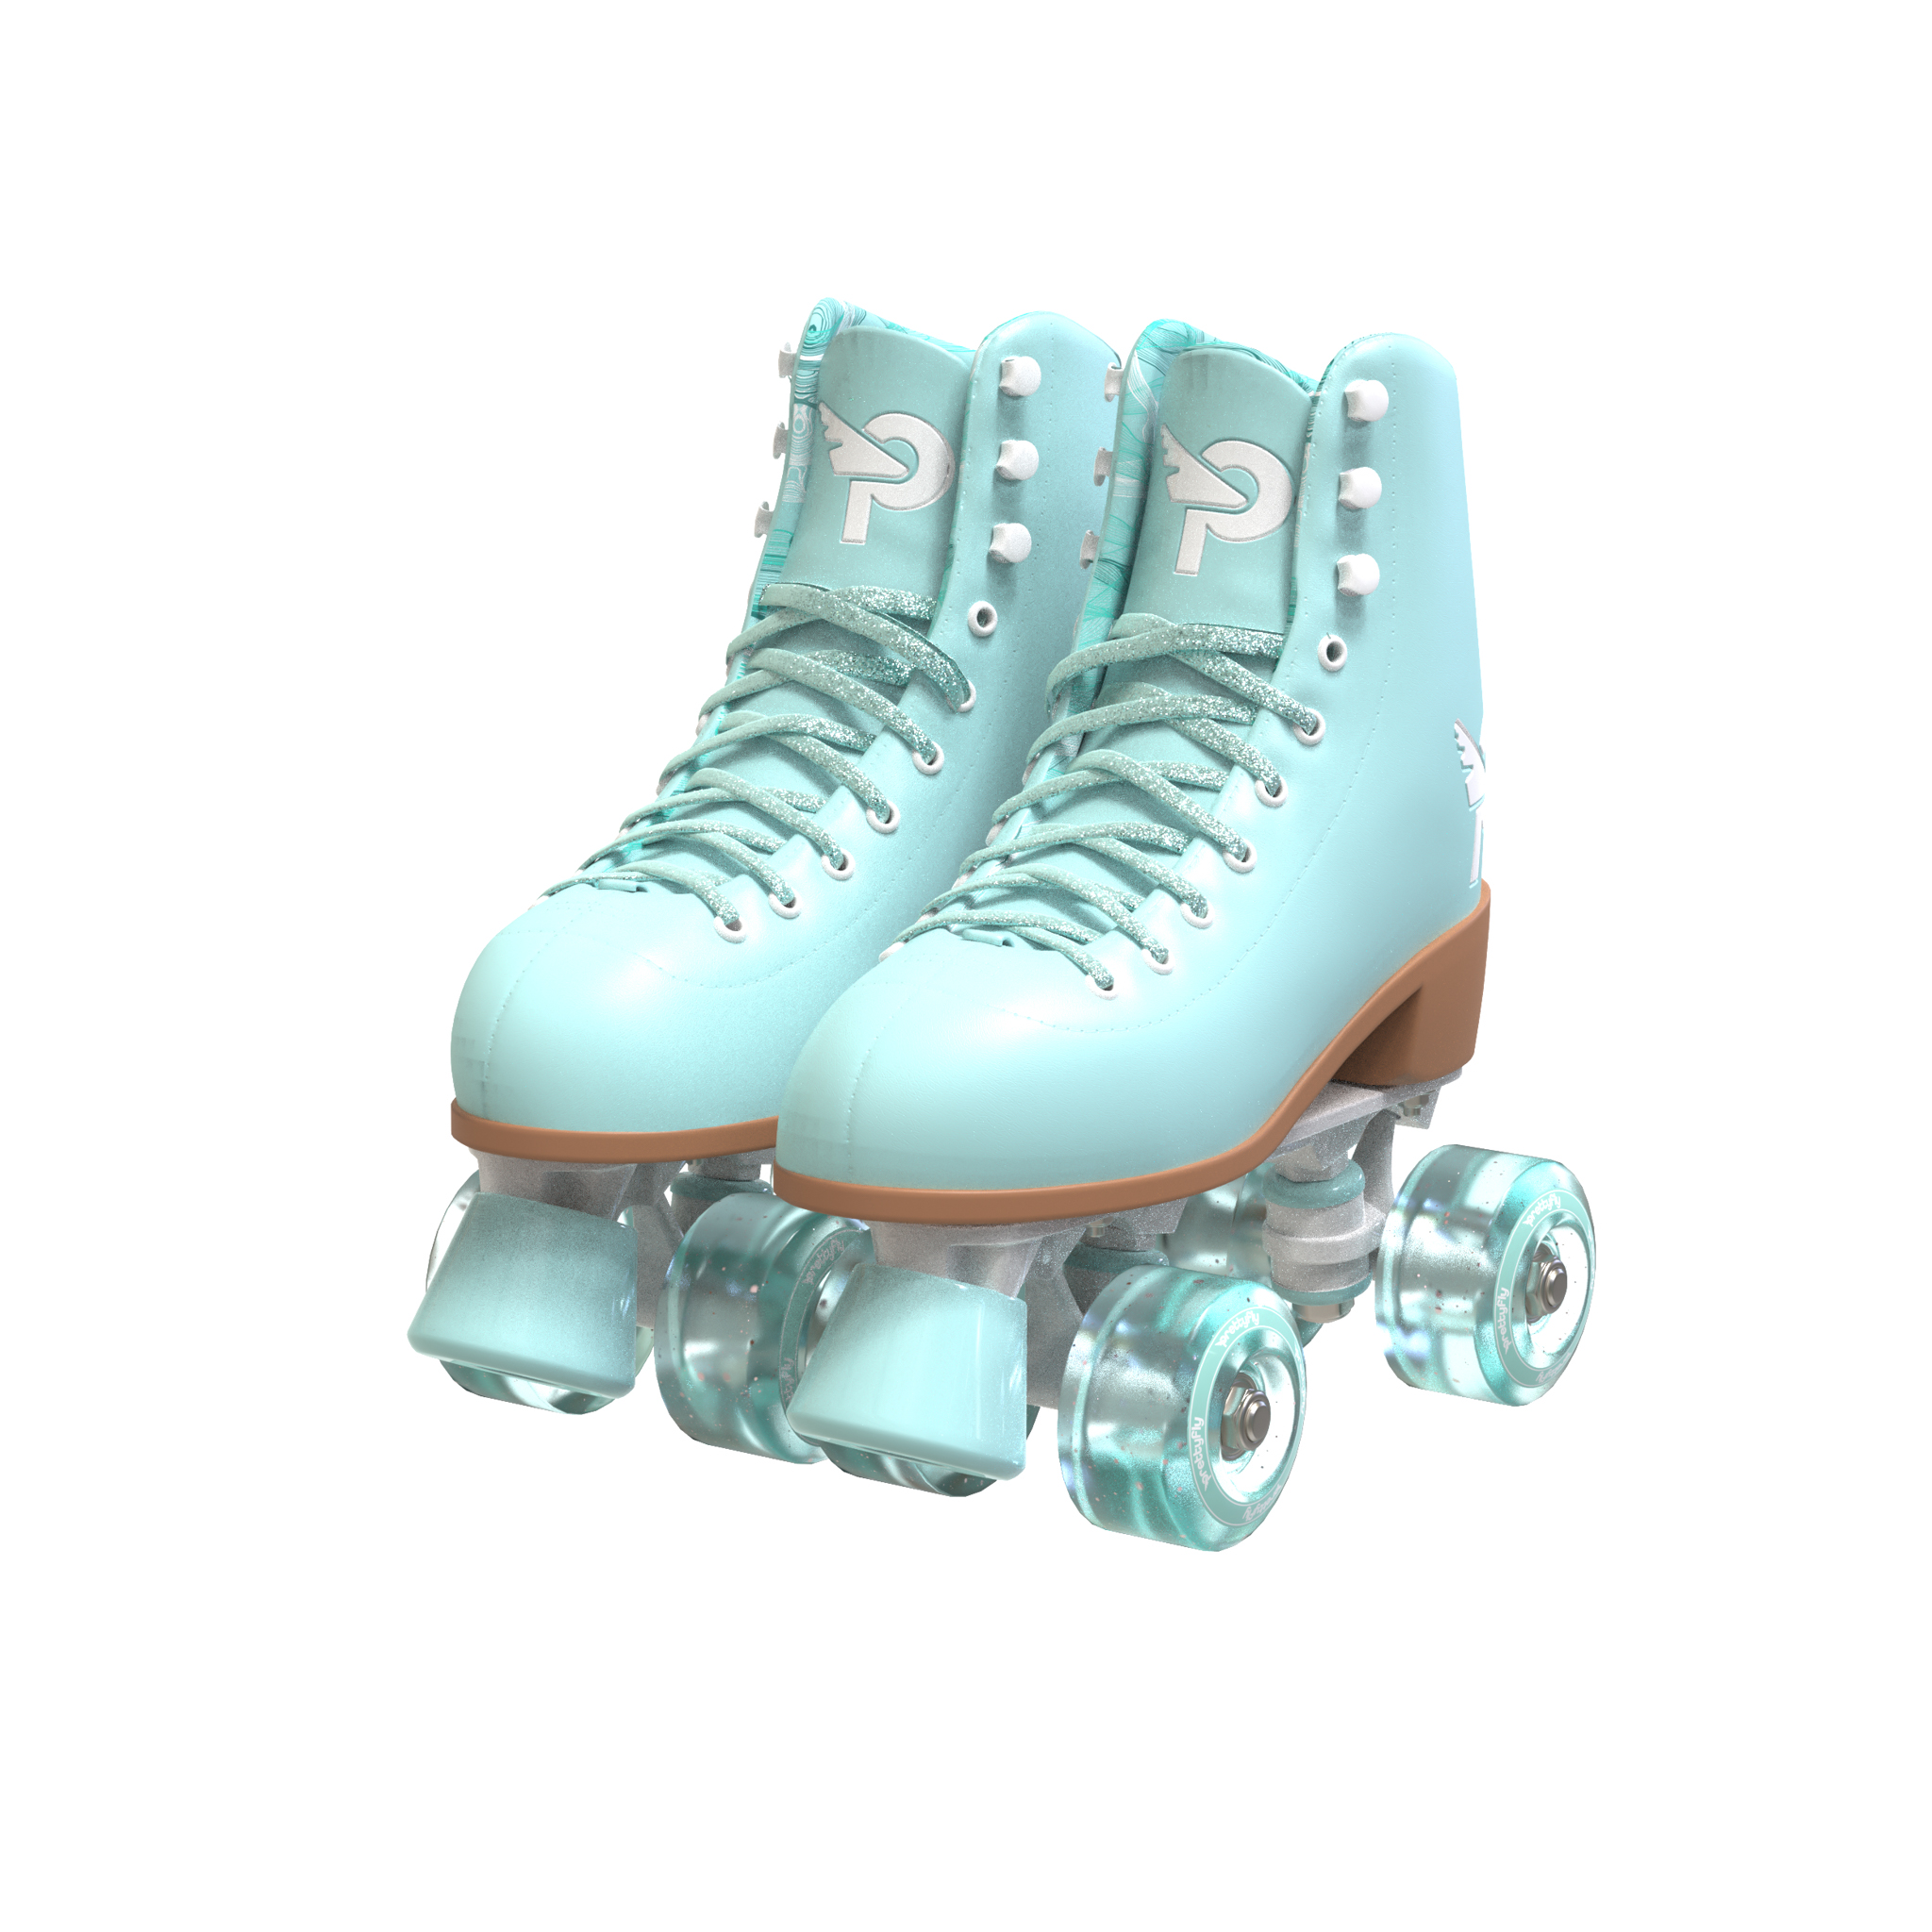 Prettyfly Retro Quad Adult Skates - Pastel Blue (Size 6), One Pair for Women